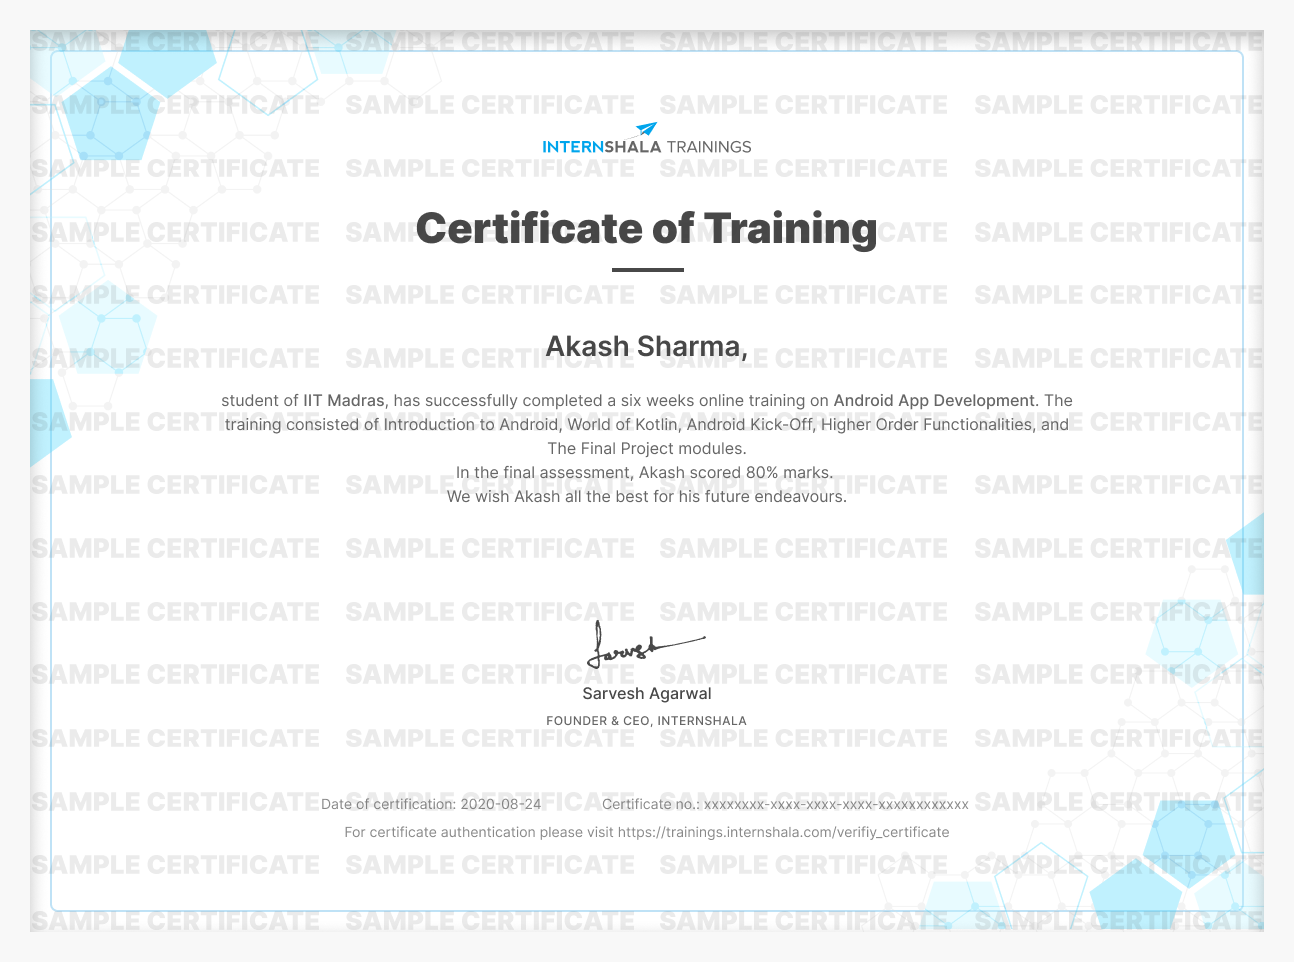 Data Science Certification Training